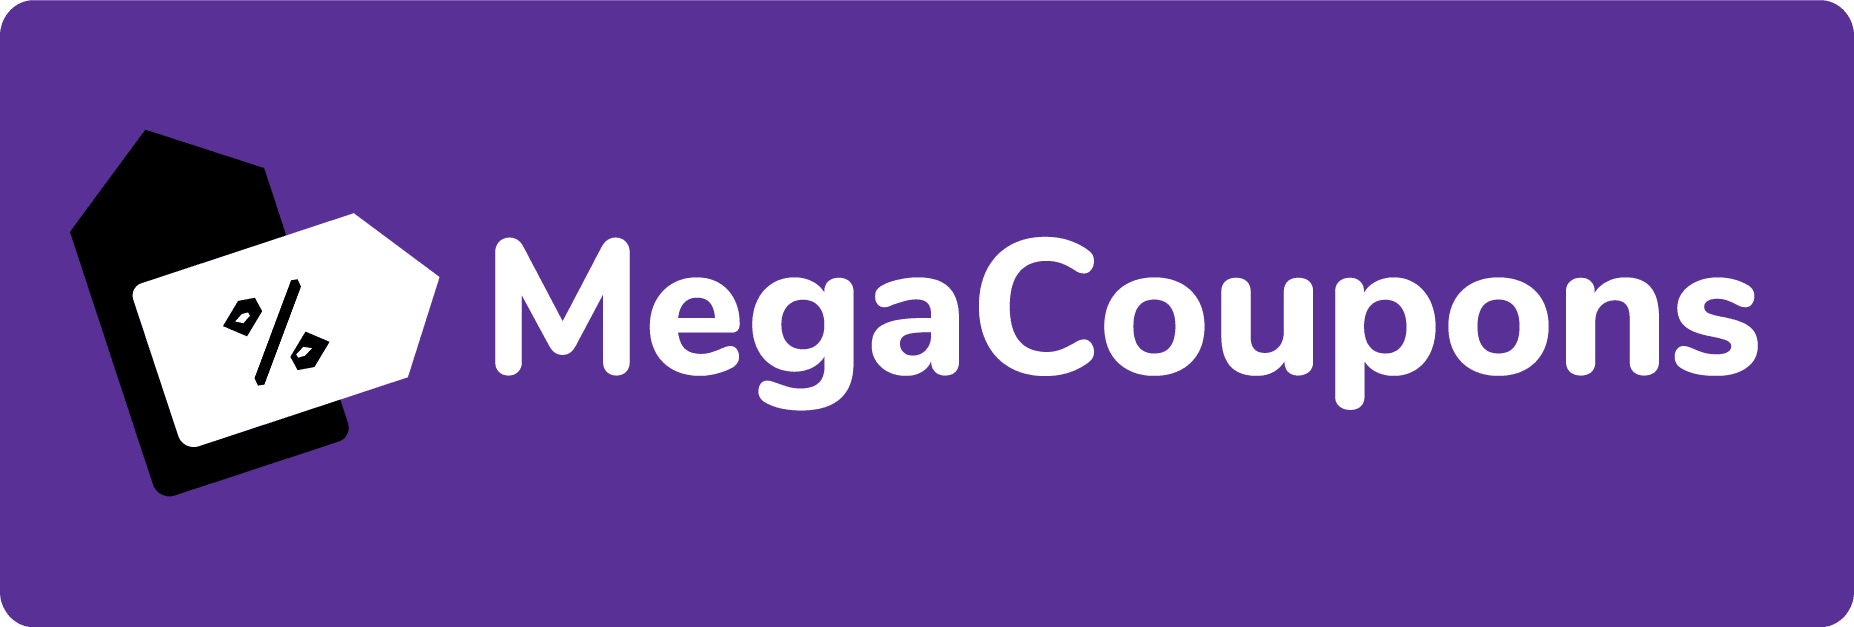 MegaCoupons homepage